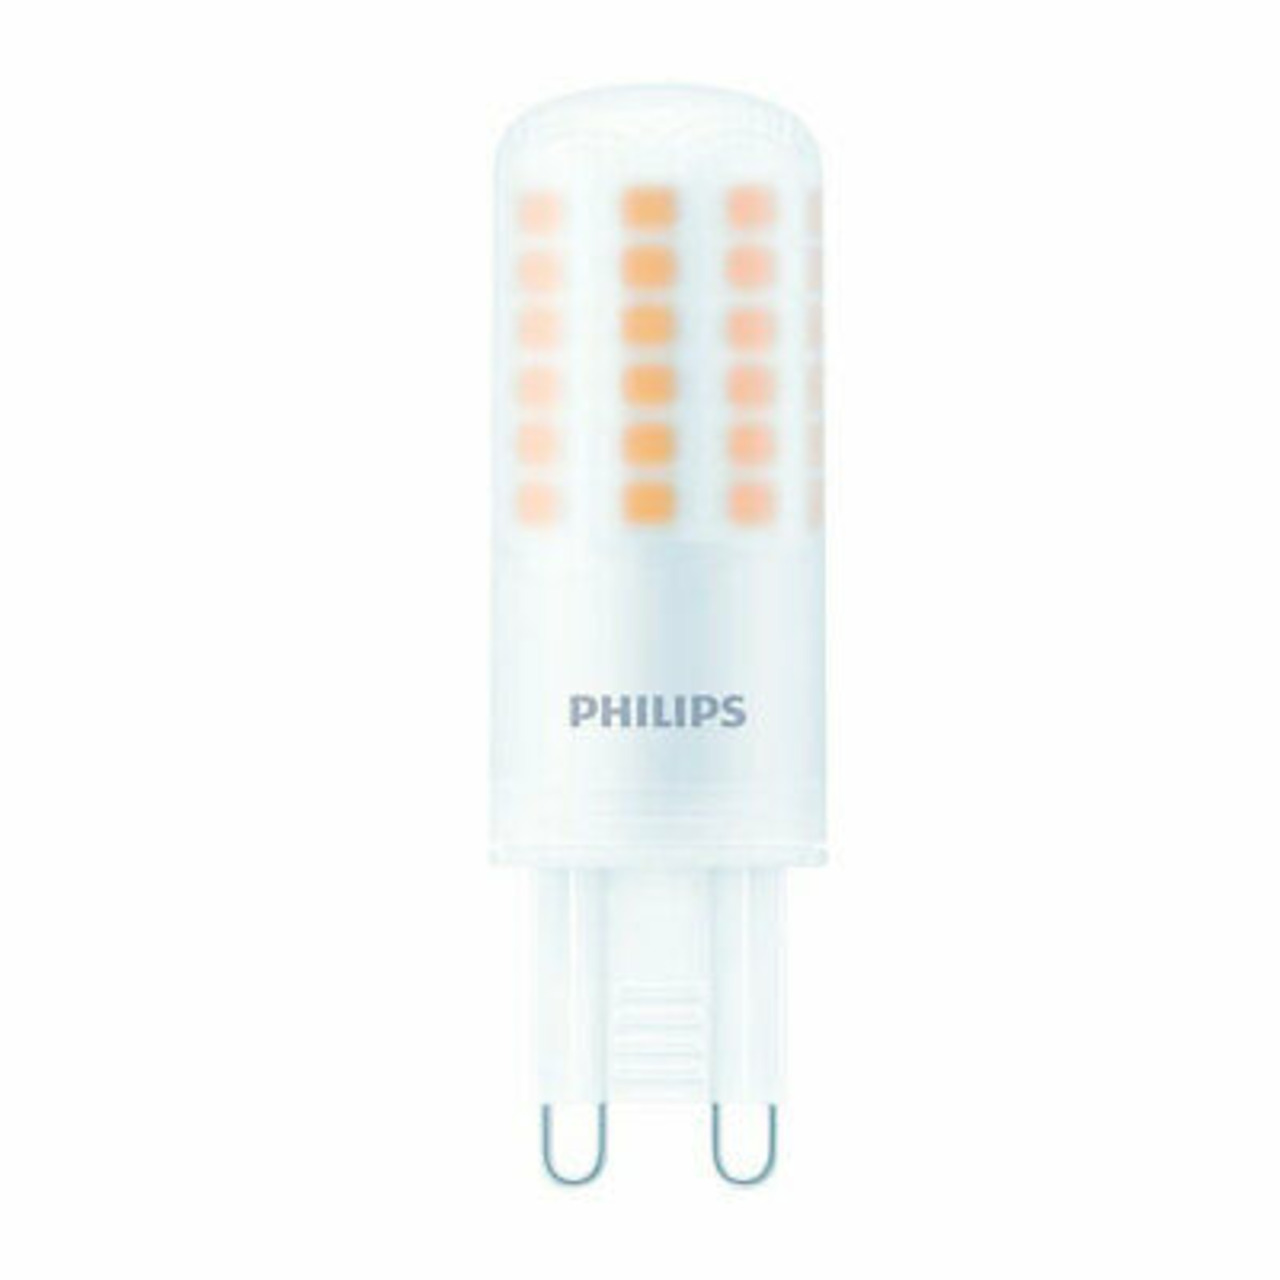 Philips 4-8-W-G9-LED-Lampe CorePro LEDcapsule- Stiftsockellampe- 570 lm- warmweiss- 2700 K unter Beleuchtung